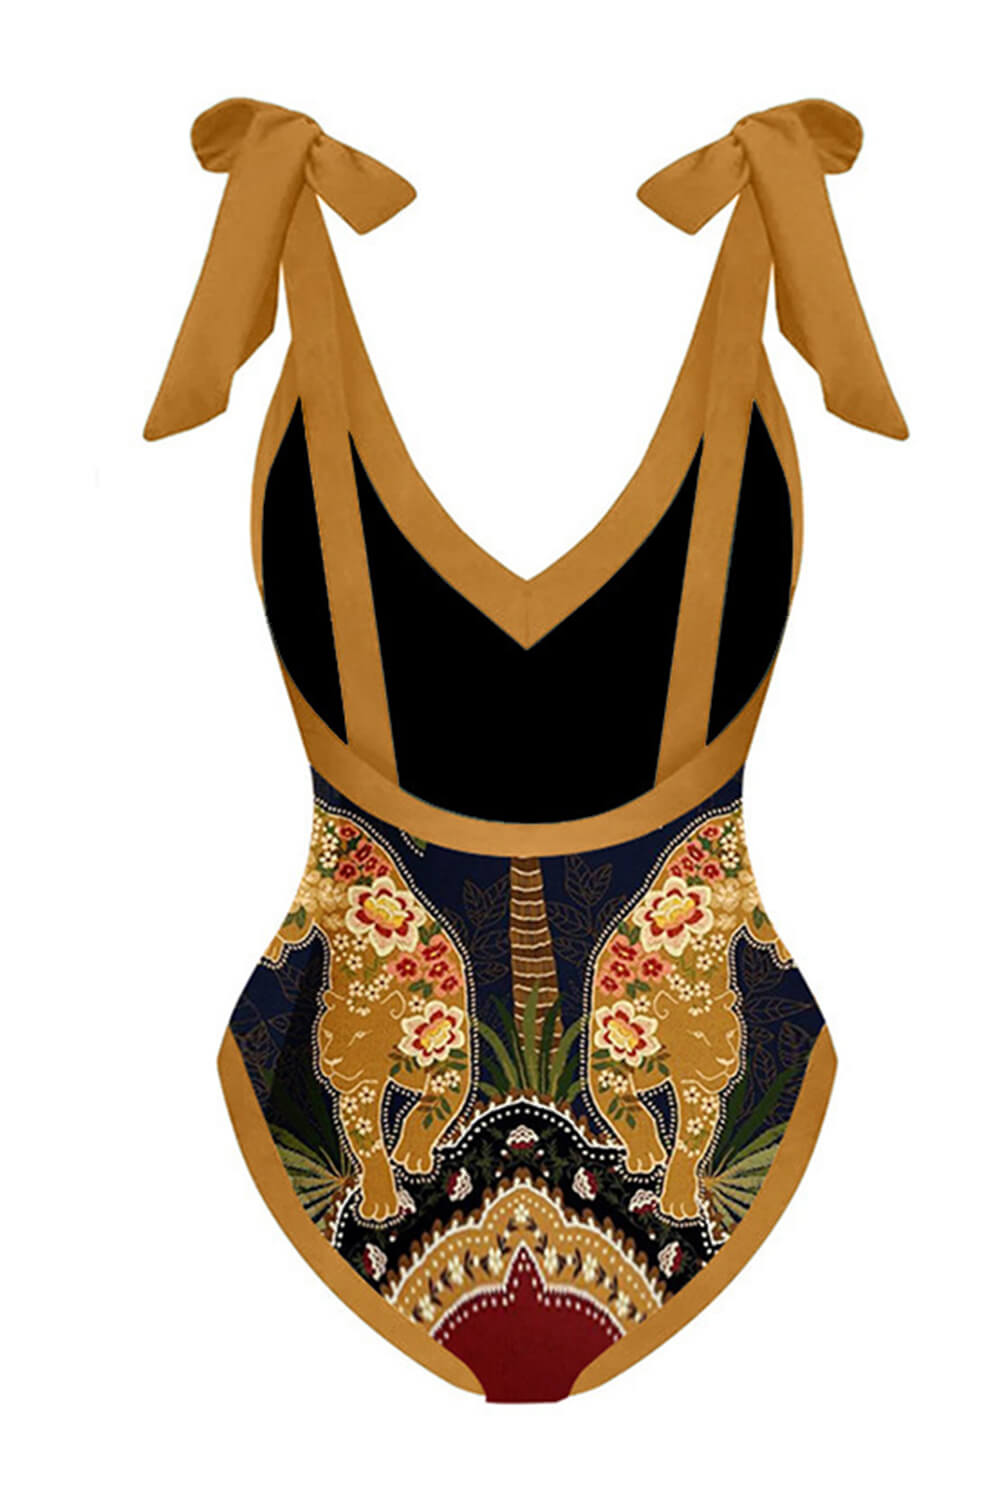 Leopard Print Plunge Tie-Shoulder One Piece Swimsuit